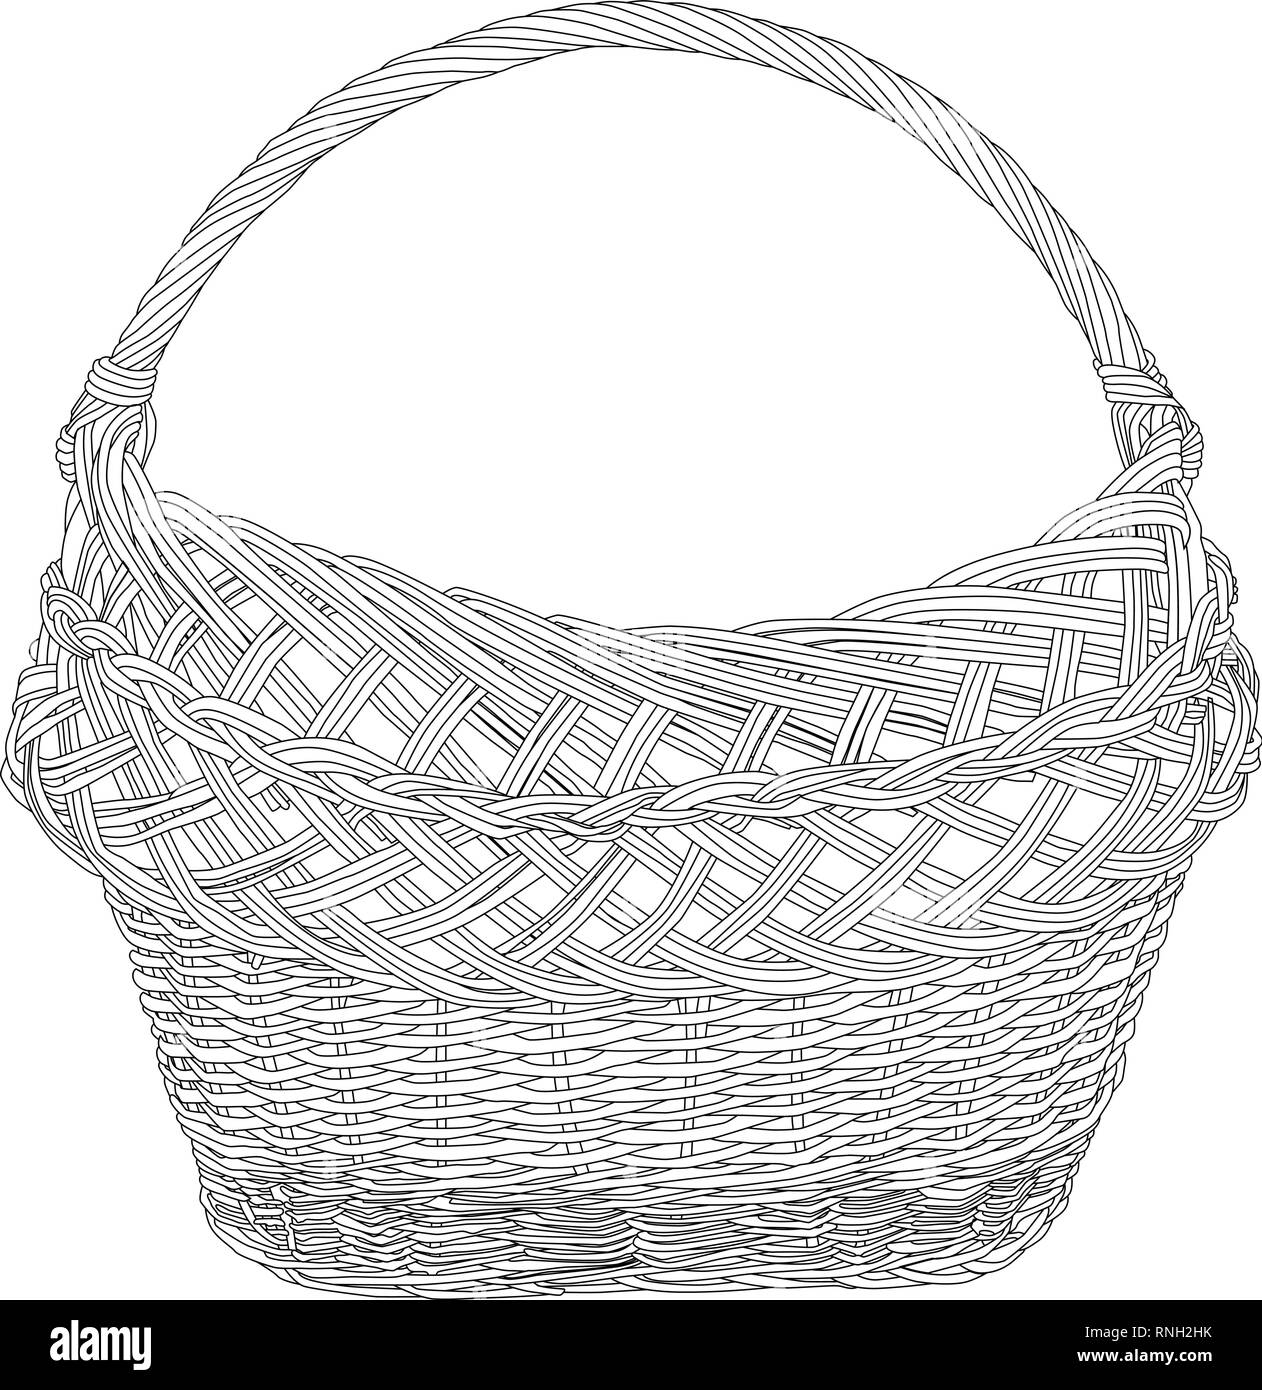 Empty wicker basket black silhouette on white background. Vector illustration. Stock Vector